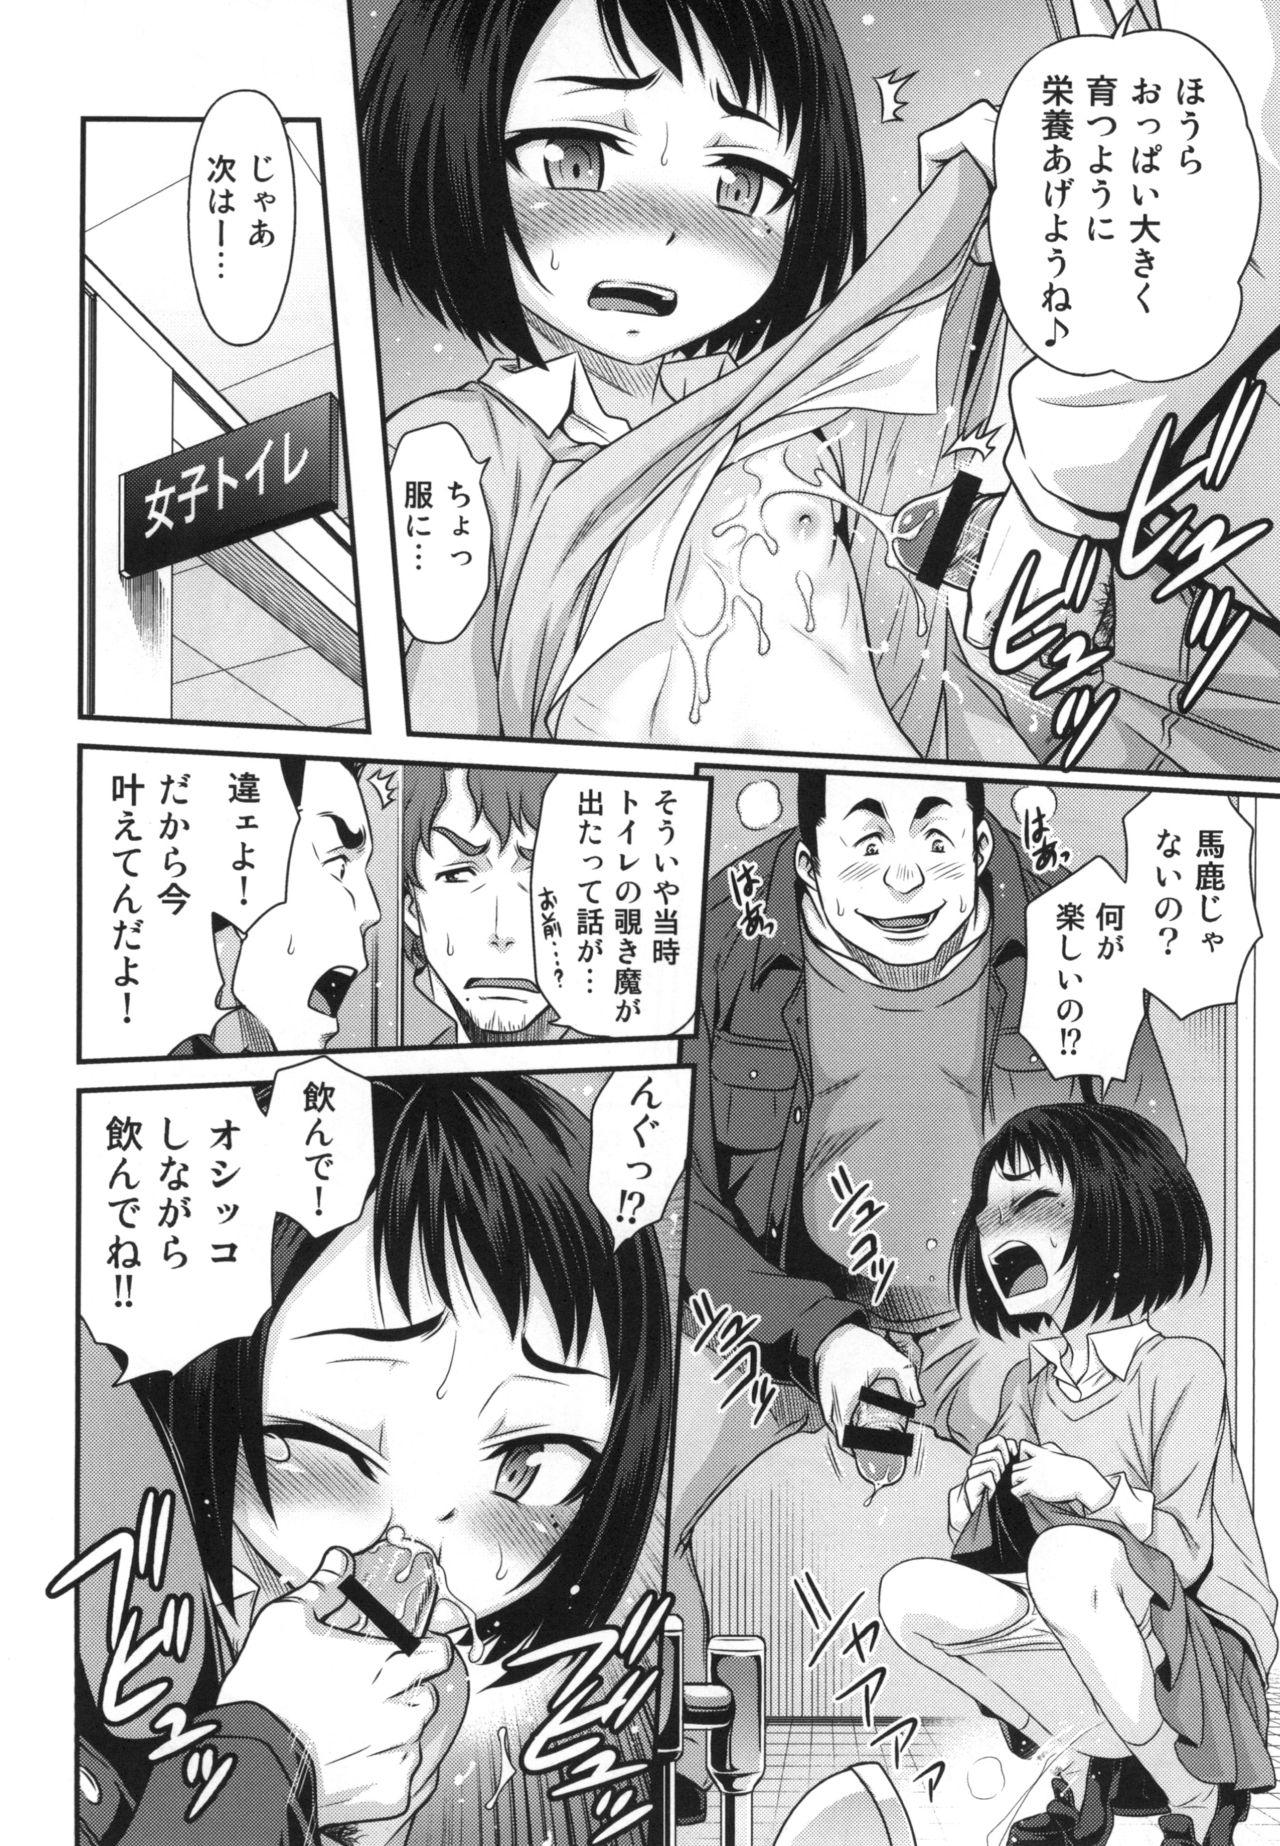 Coroa Erika no ChupaChupa Quest!! - Sakura quest Babes - Page 12